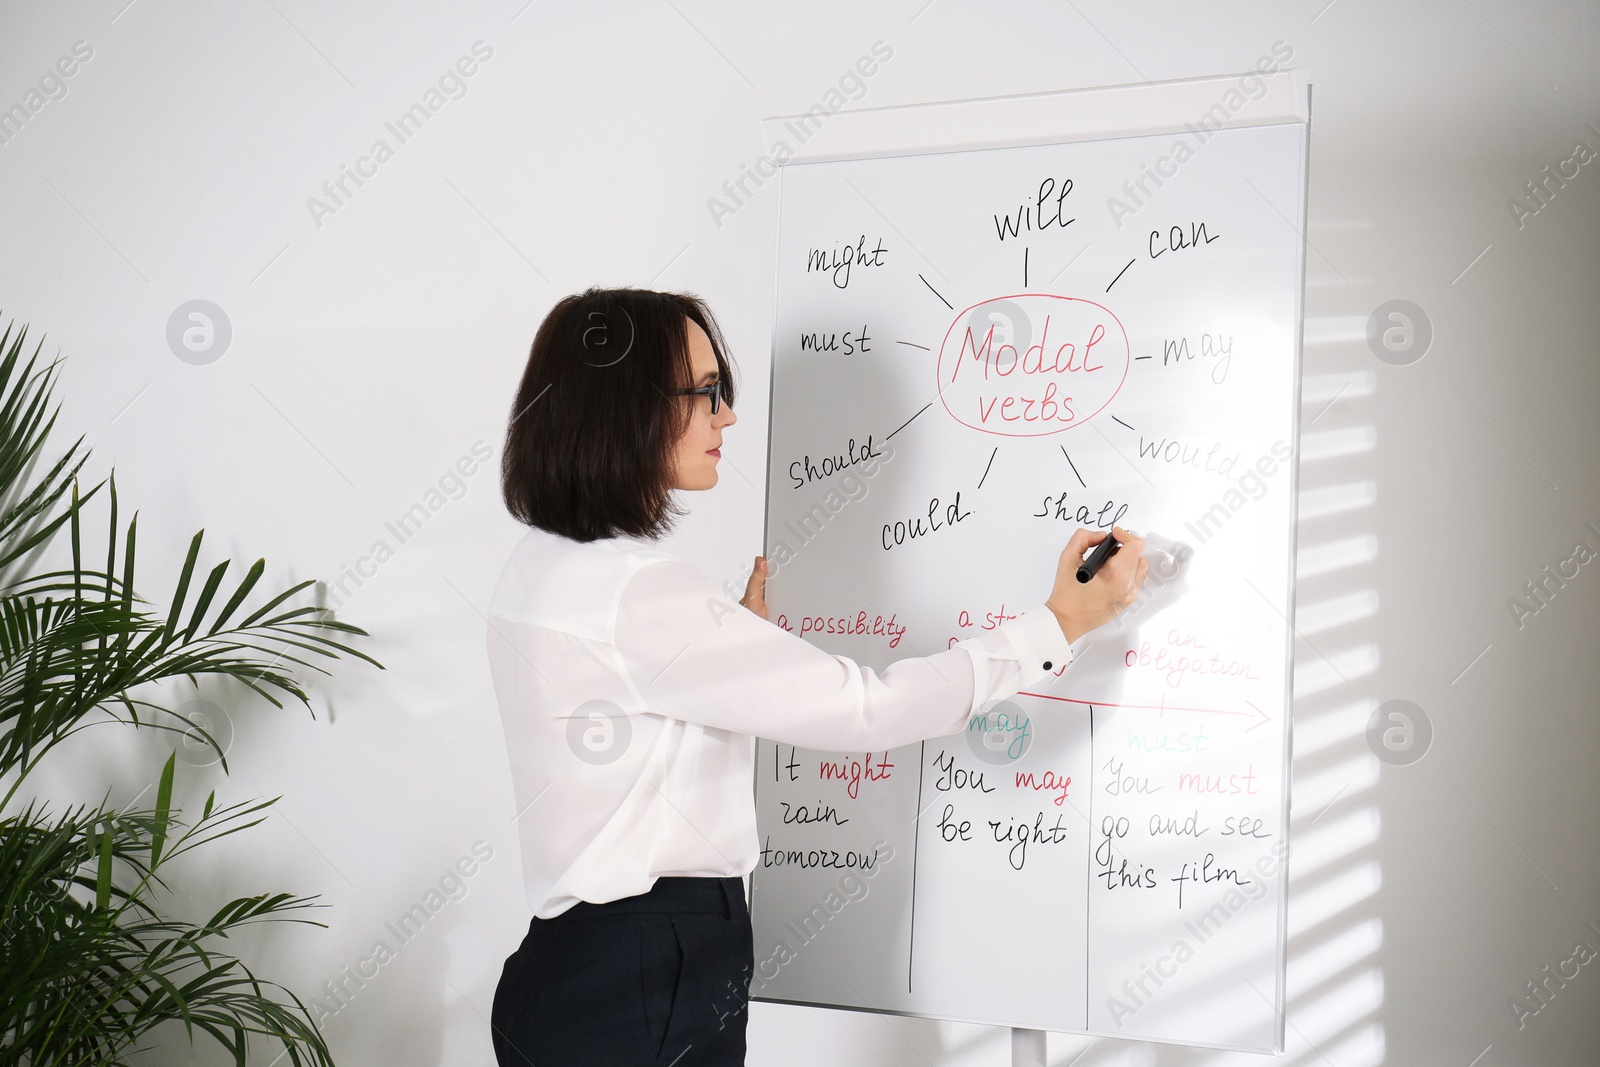 Photo of English teacher giving lesson on modal verbs near whiteboard in classroom